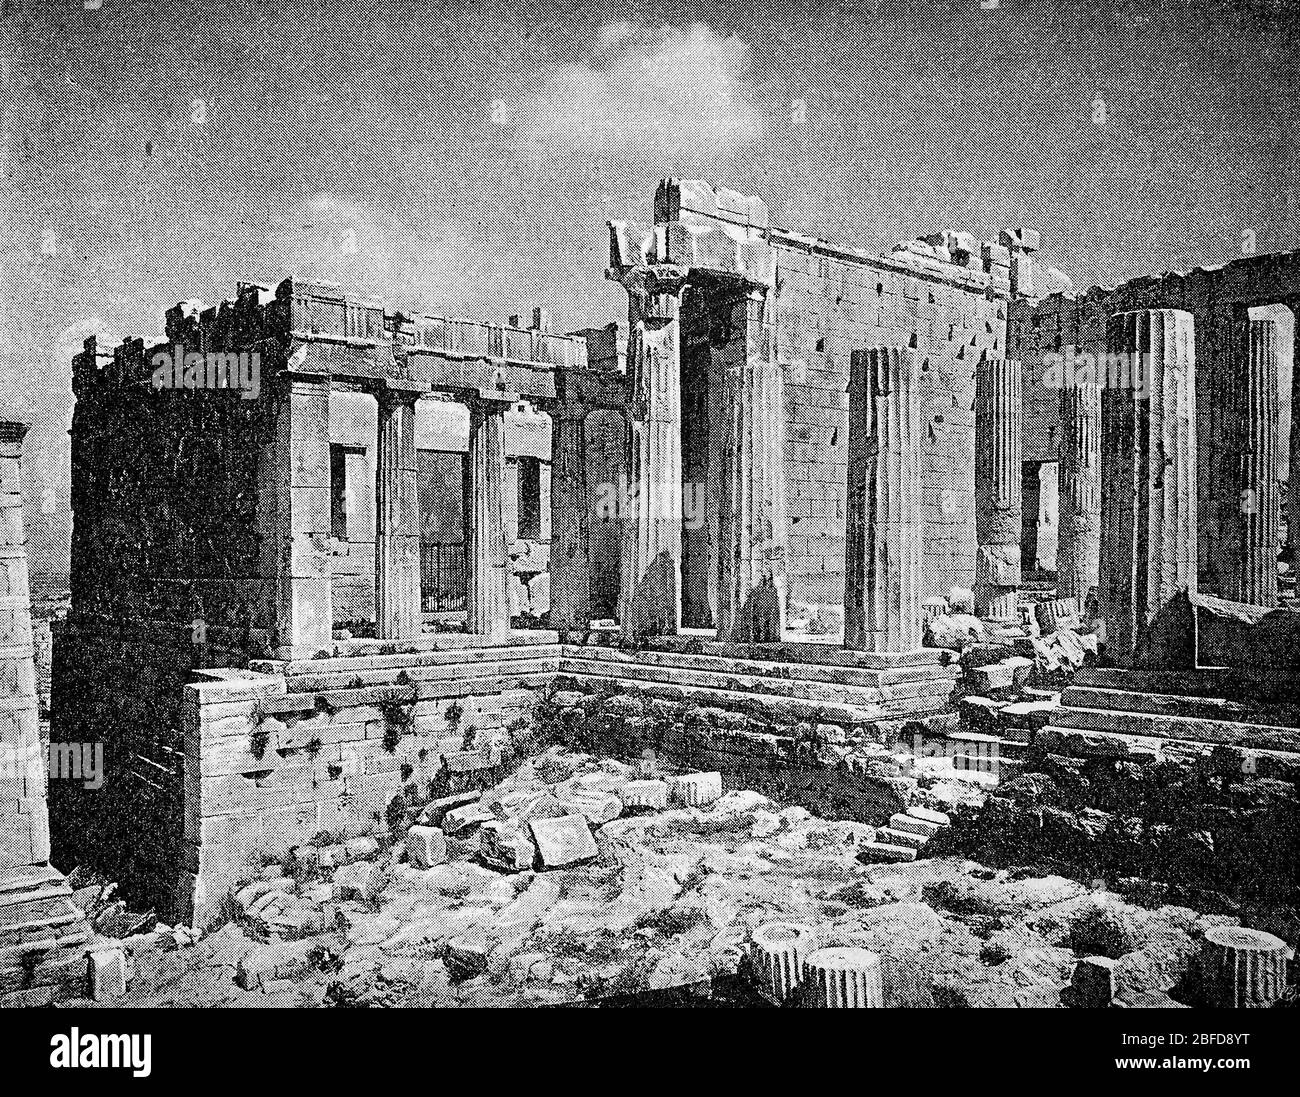 File:+ 1987 wurde die Akropolis Athens Teil des UNESCO-Welterbes. 19.jpg -  Wikimedia Commons